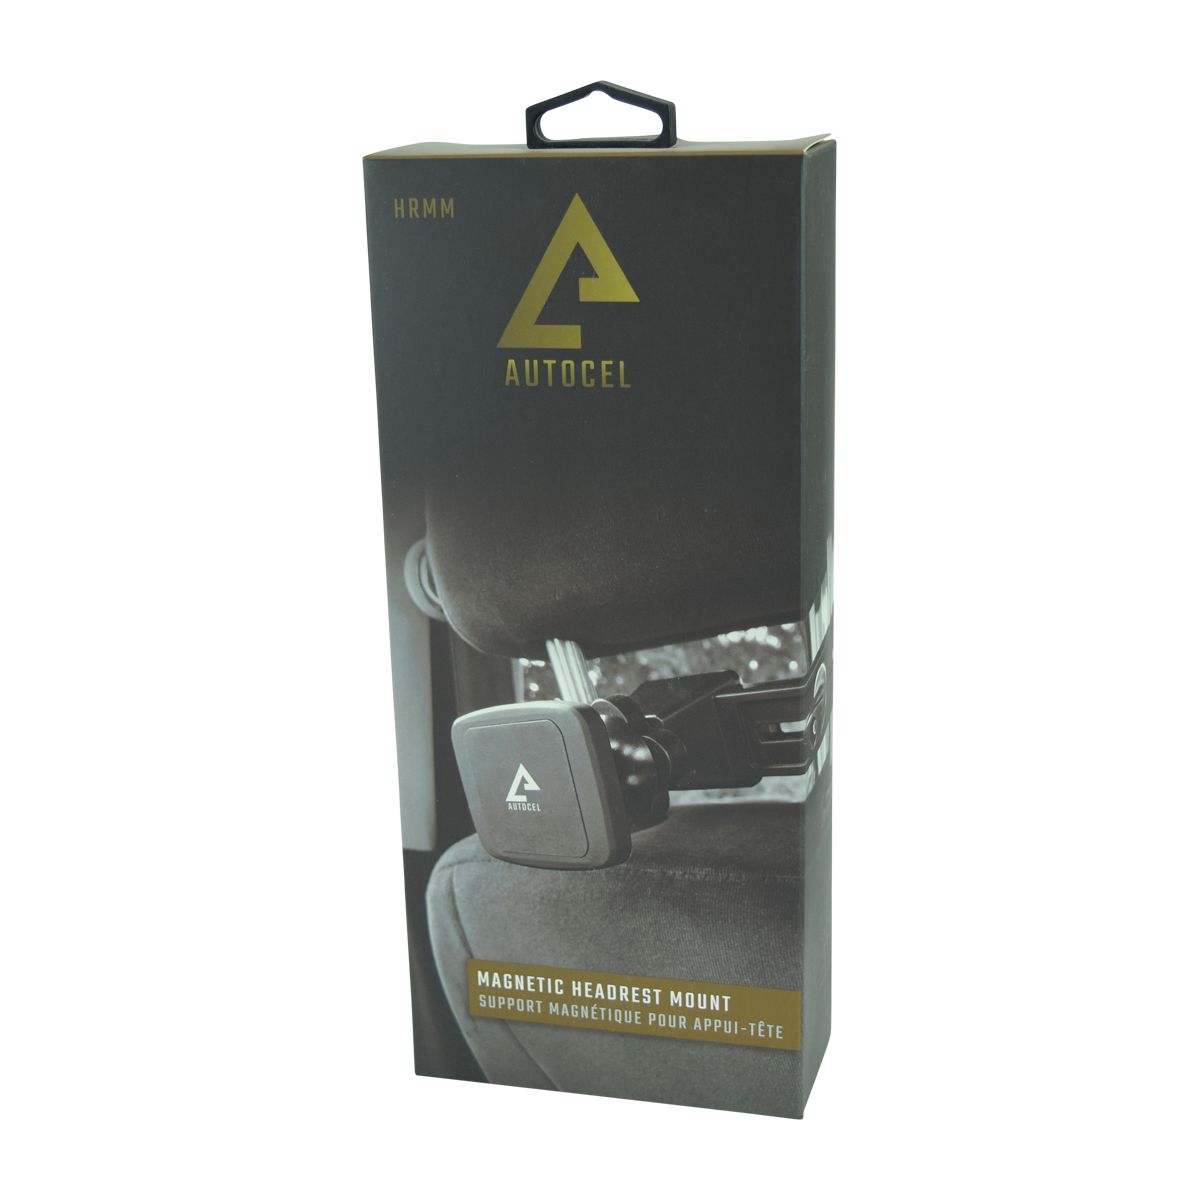 Autocel HRMM - Magnetic Headrest Mount